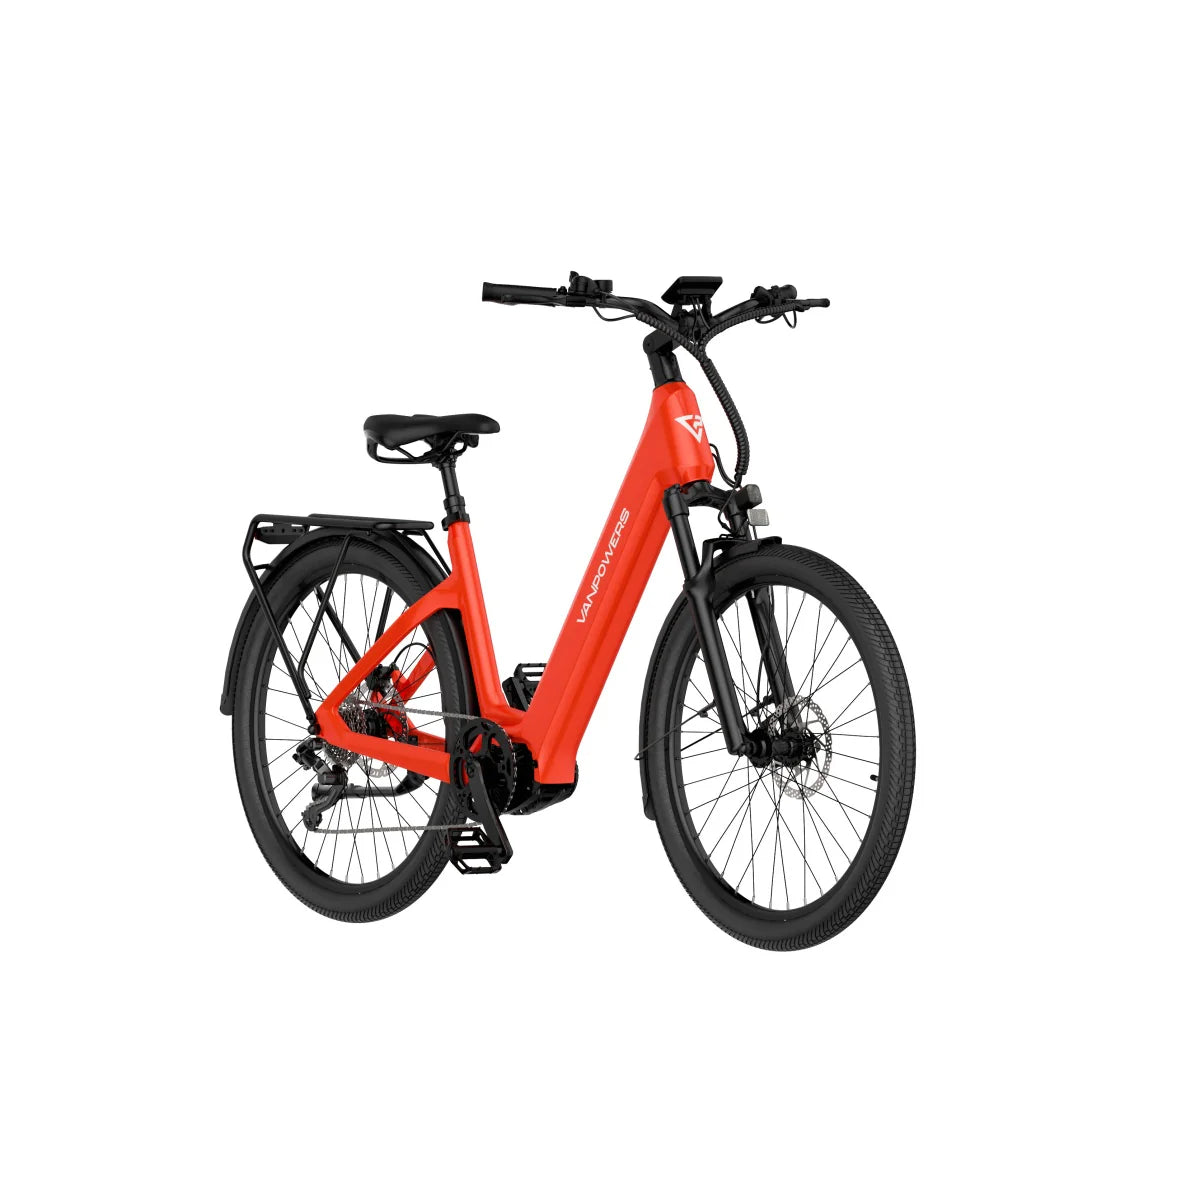 Electric Bike Vanpowers Urbangide Ultra L - 500W Motor 48V14.4AH Battery 110KM Pedal-Assist Mode Range Hydraulic Disc Brakes - Lava Red